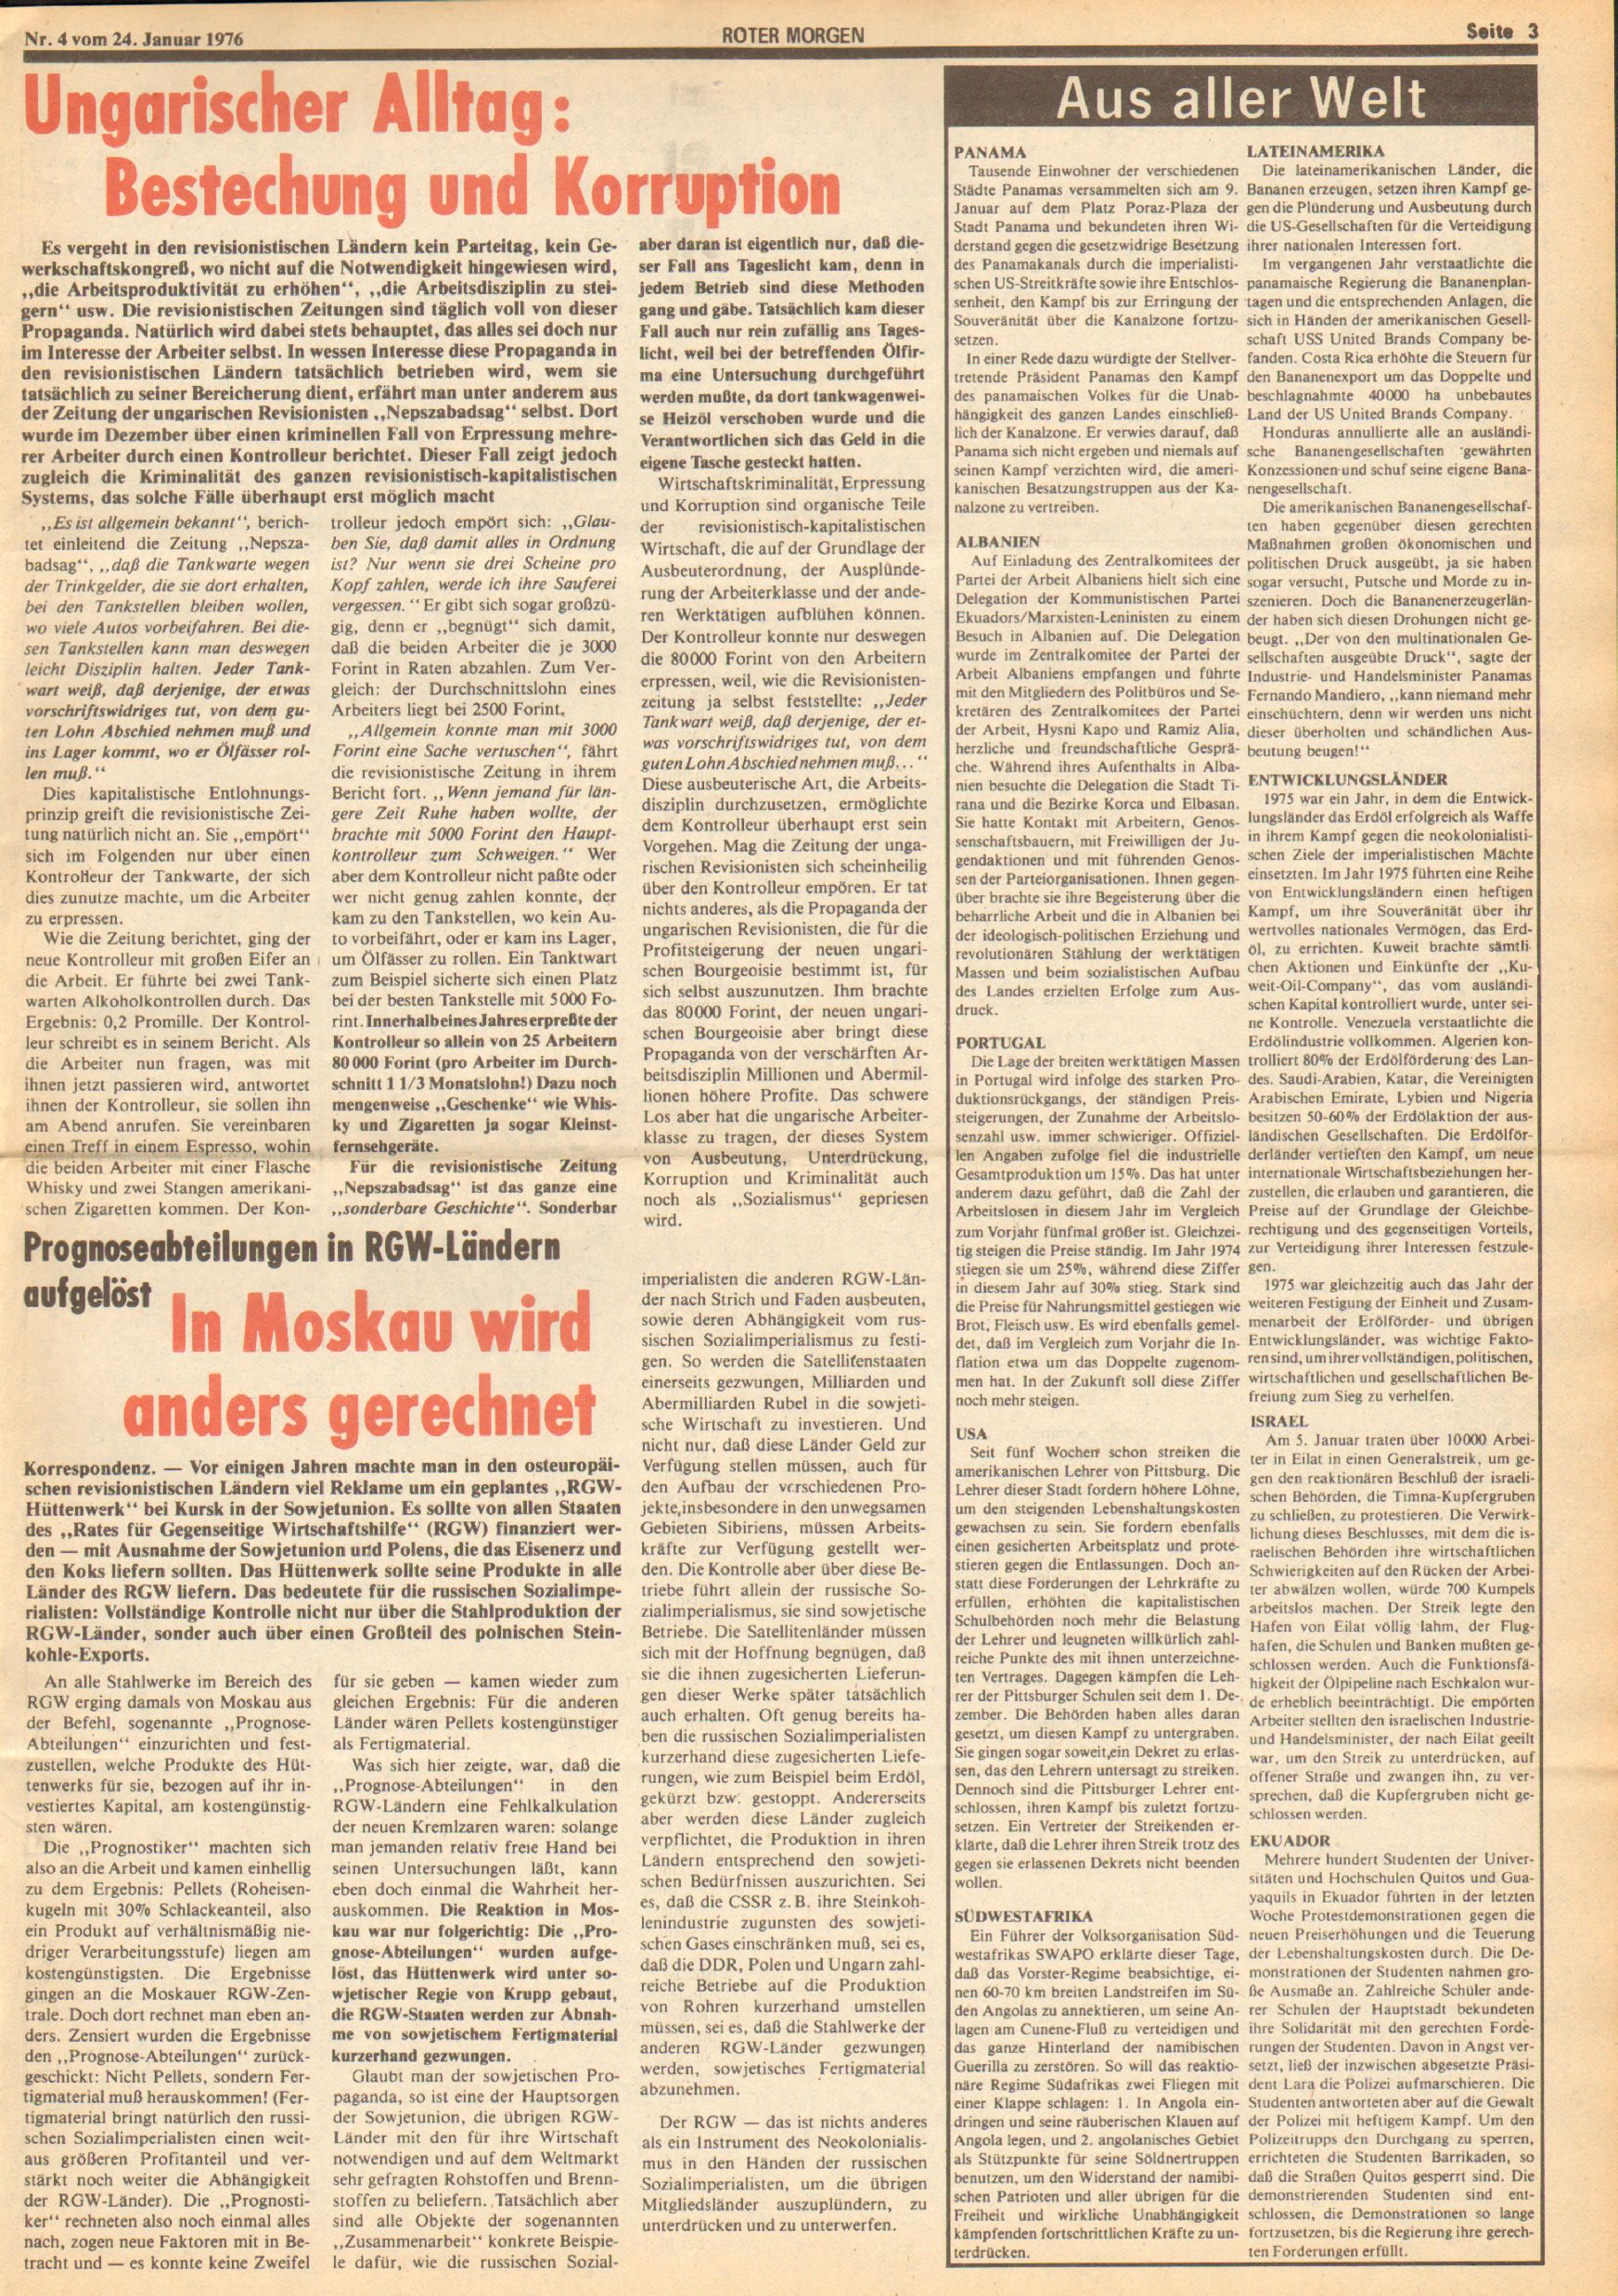 Roter Morgen, 10. Jg., 24. Januar 1976, Nr. 4, Seite 3